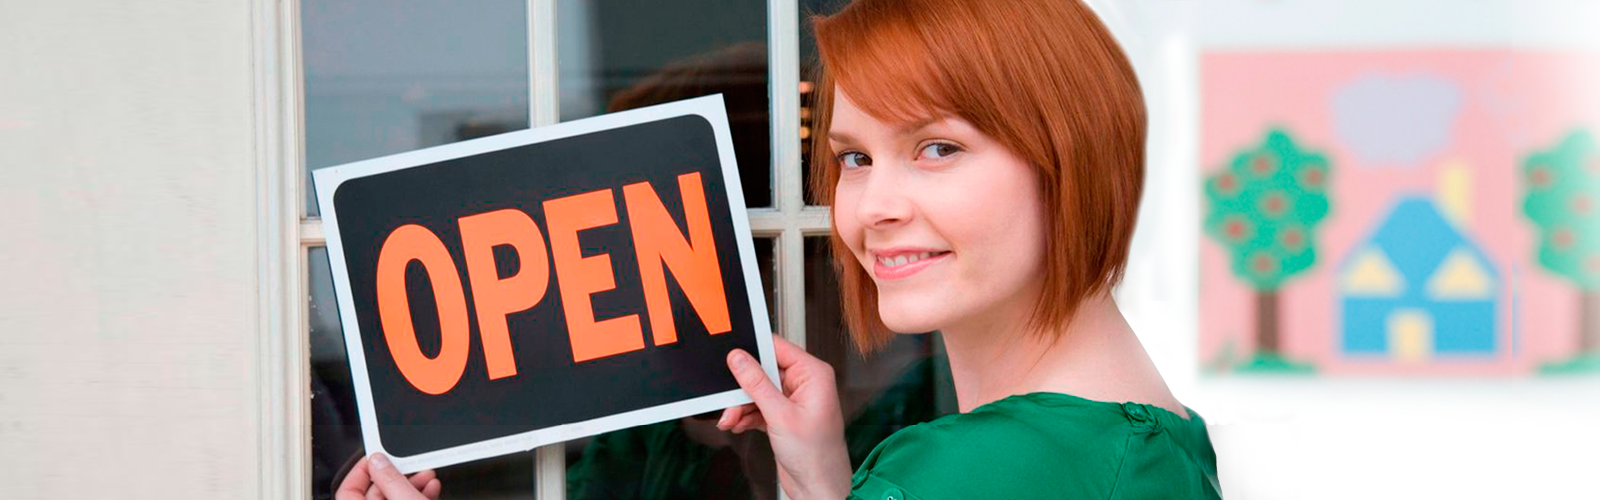 Woman with open sign on door